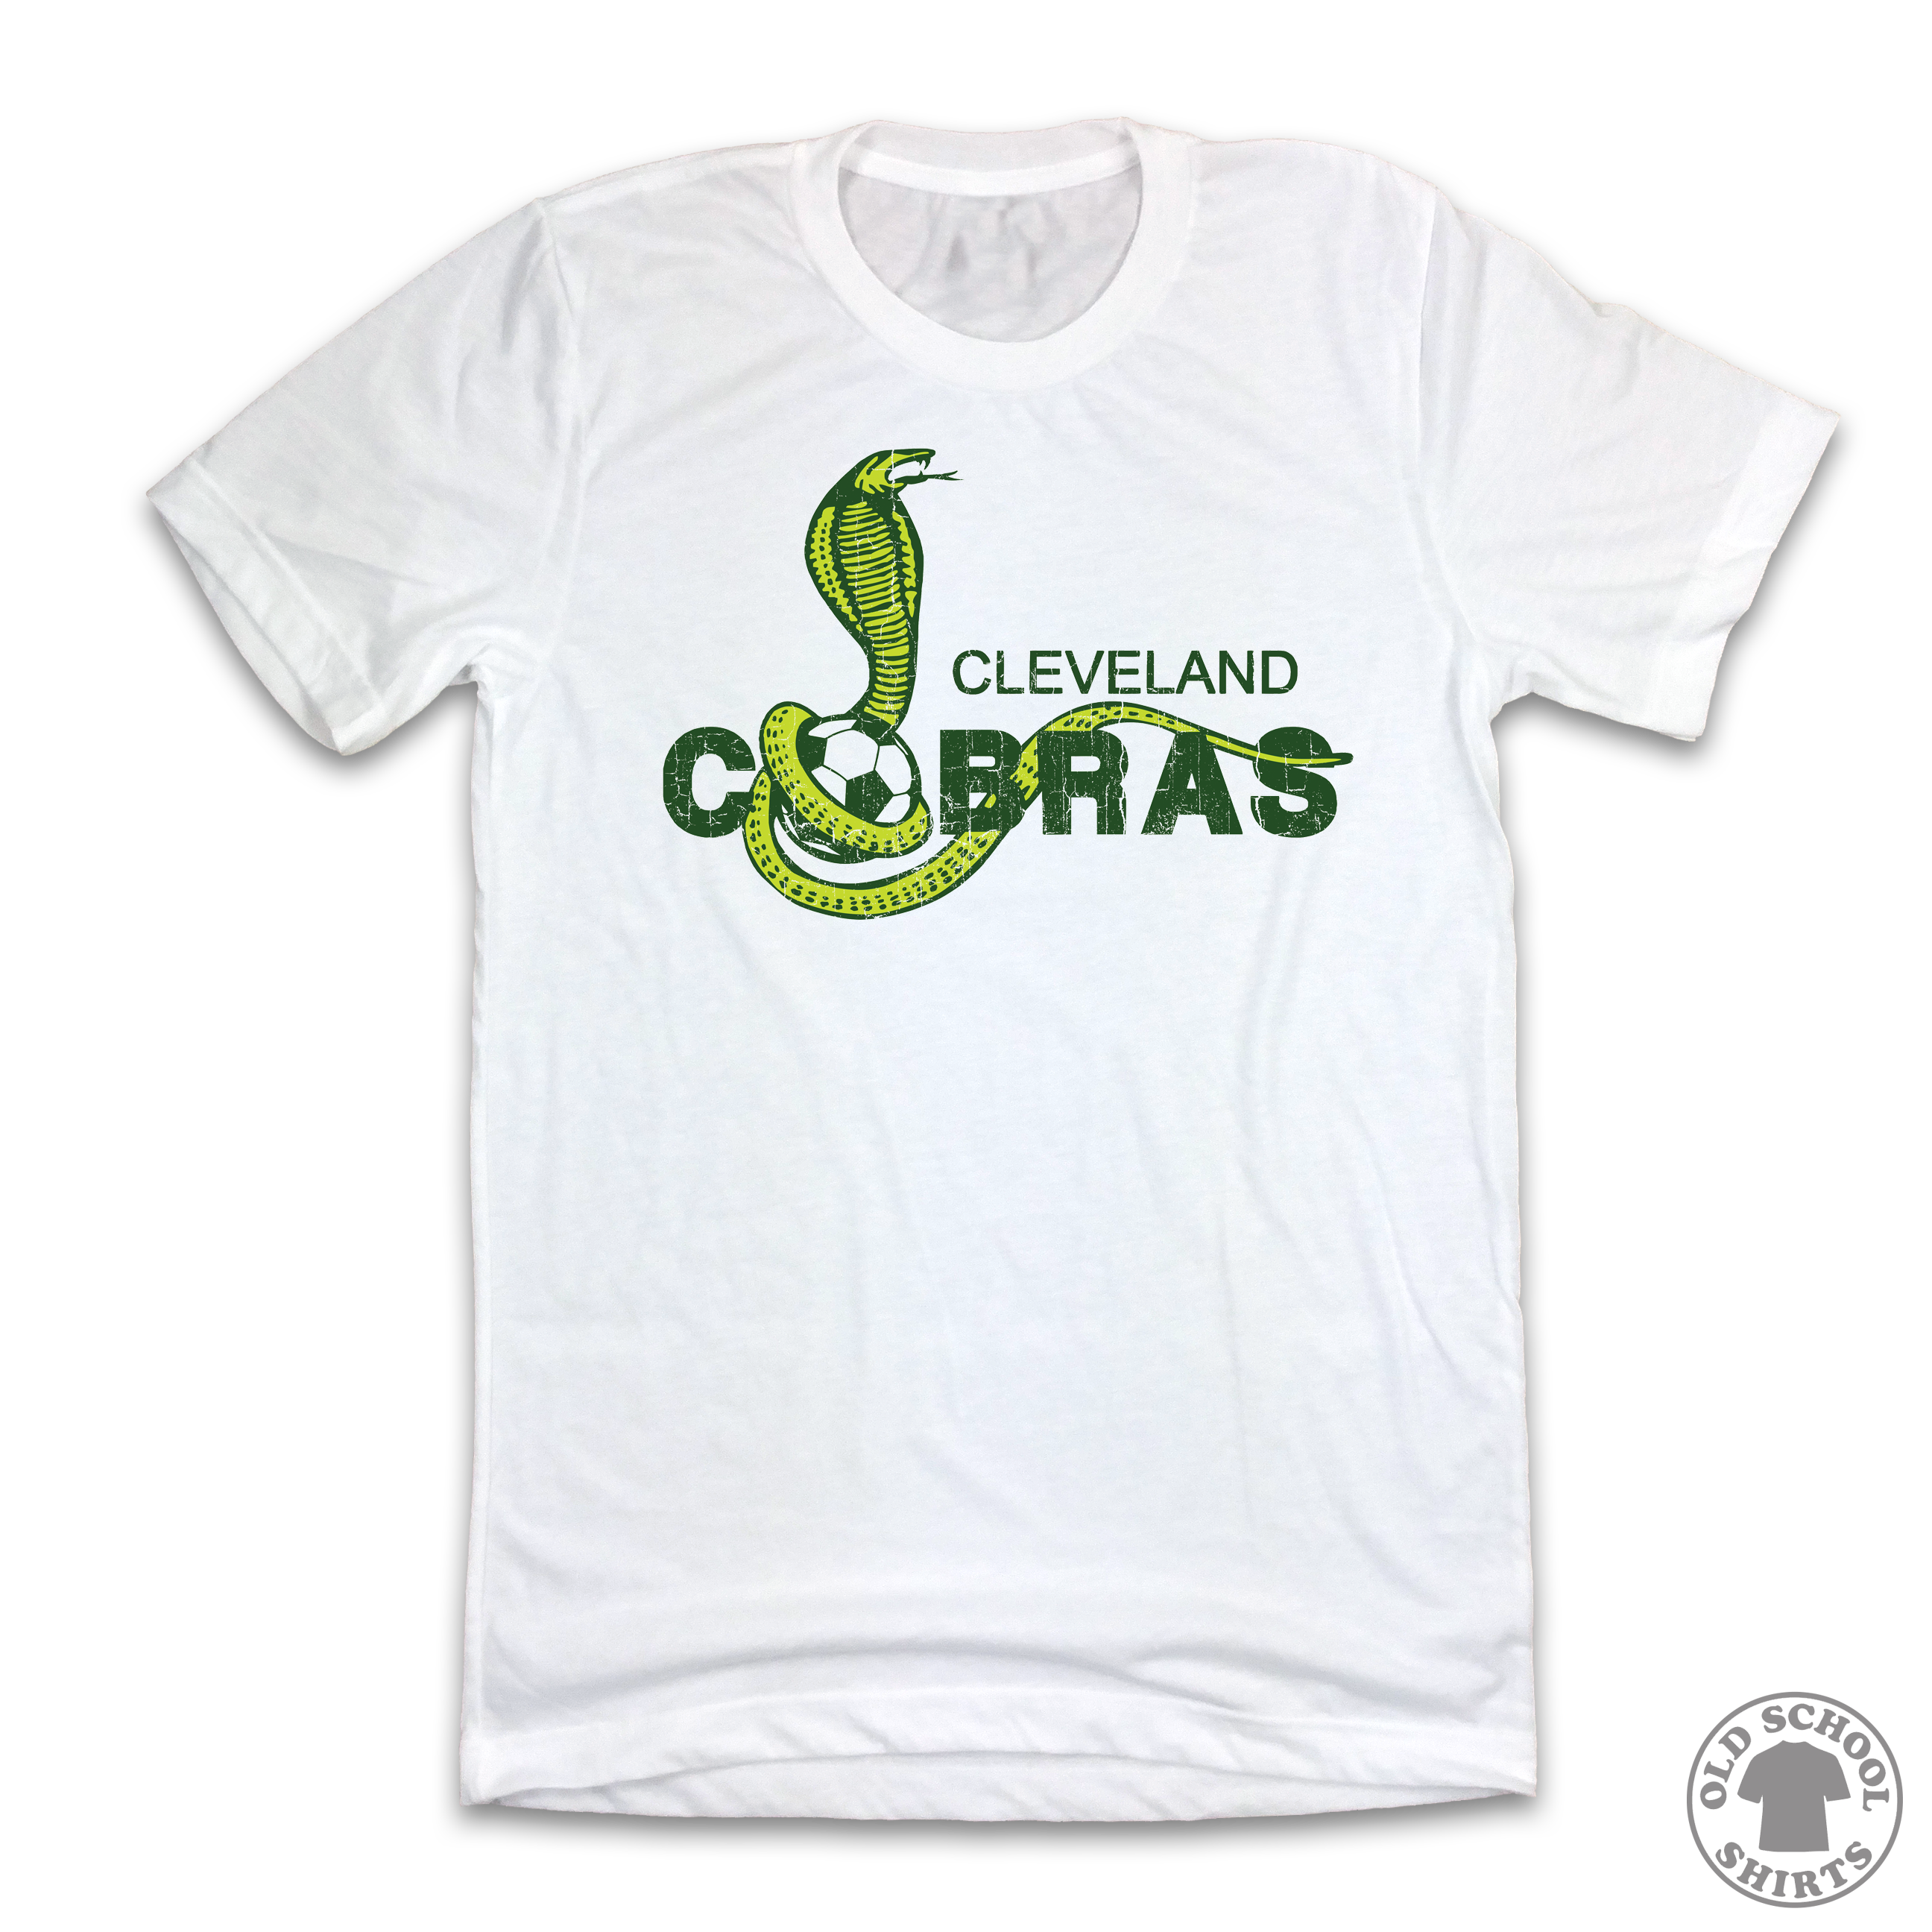 Cleveland Cobras - Old School Shirts- Retro Sports T Shirts